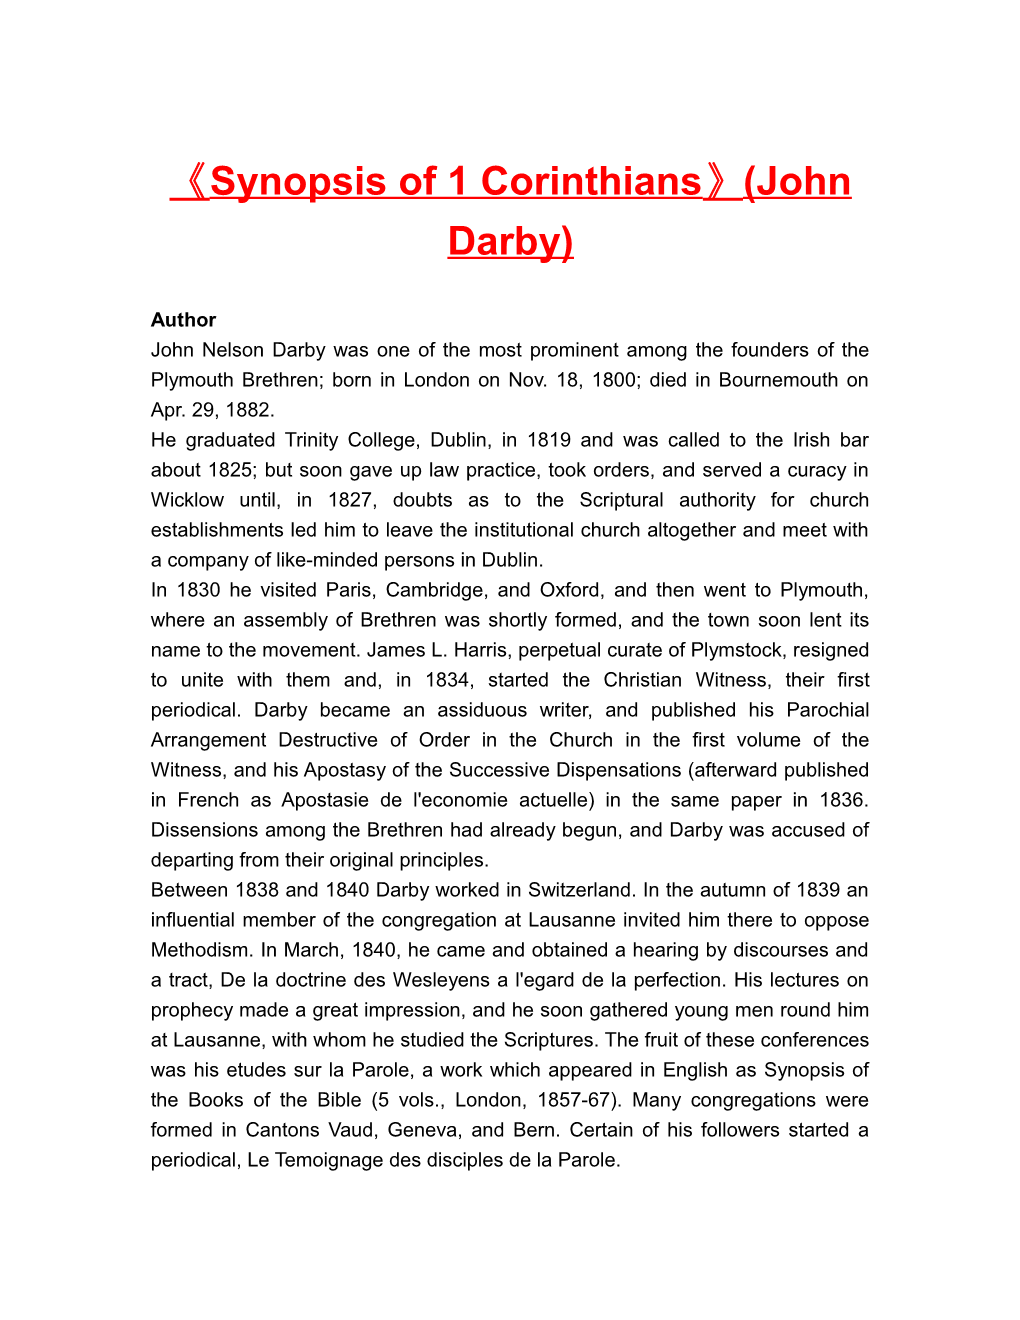 Synopsis of 1 Corinthians (John Darby)